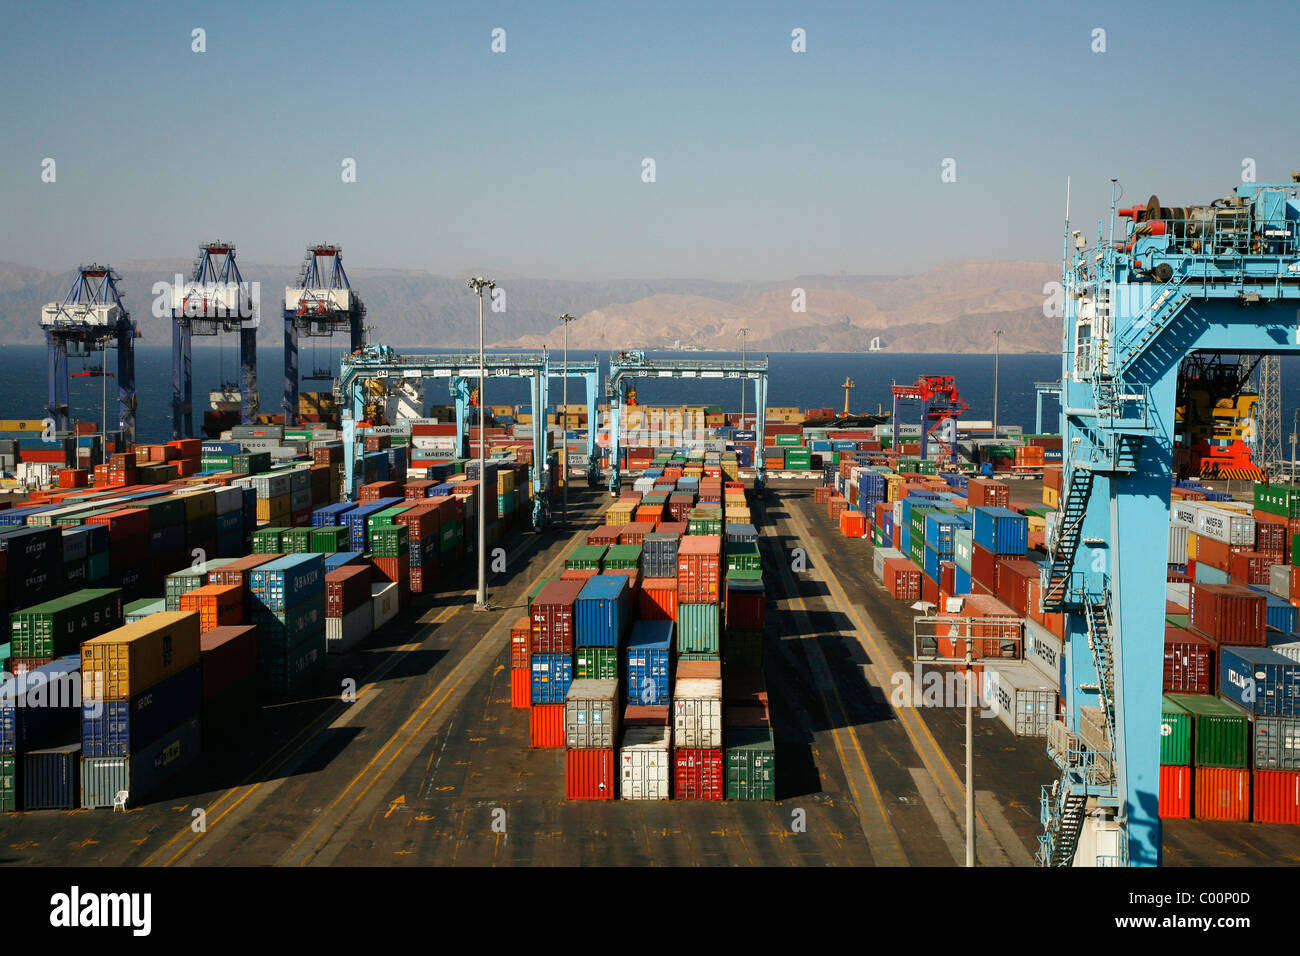 The port of Aqaba, Jordan Stock Photo - Alamy